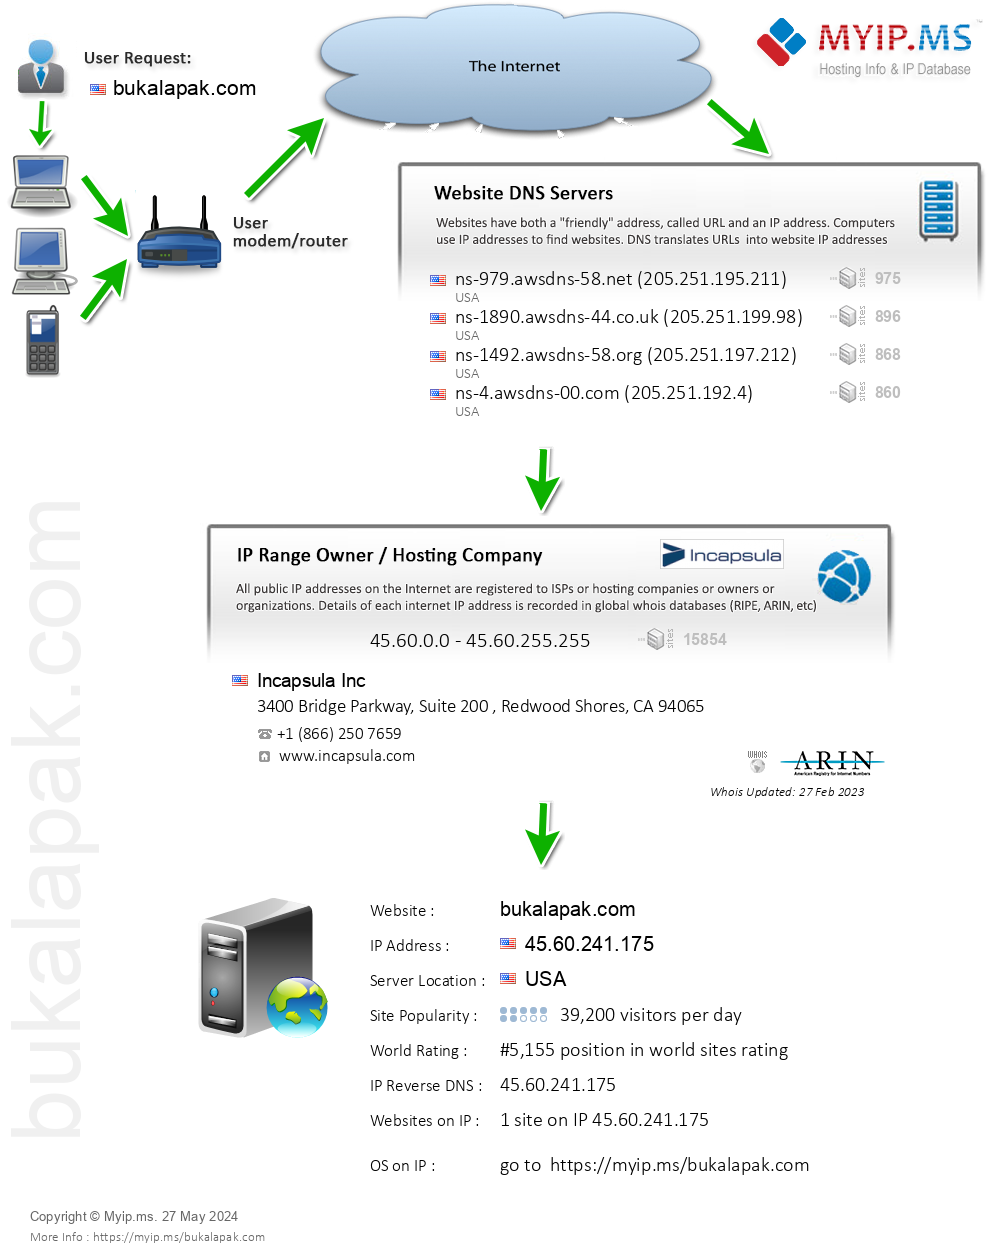 Bukalapak.com - Website Hosting Visual IP Diagram